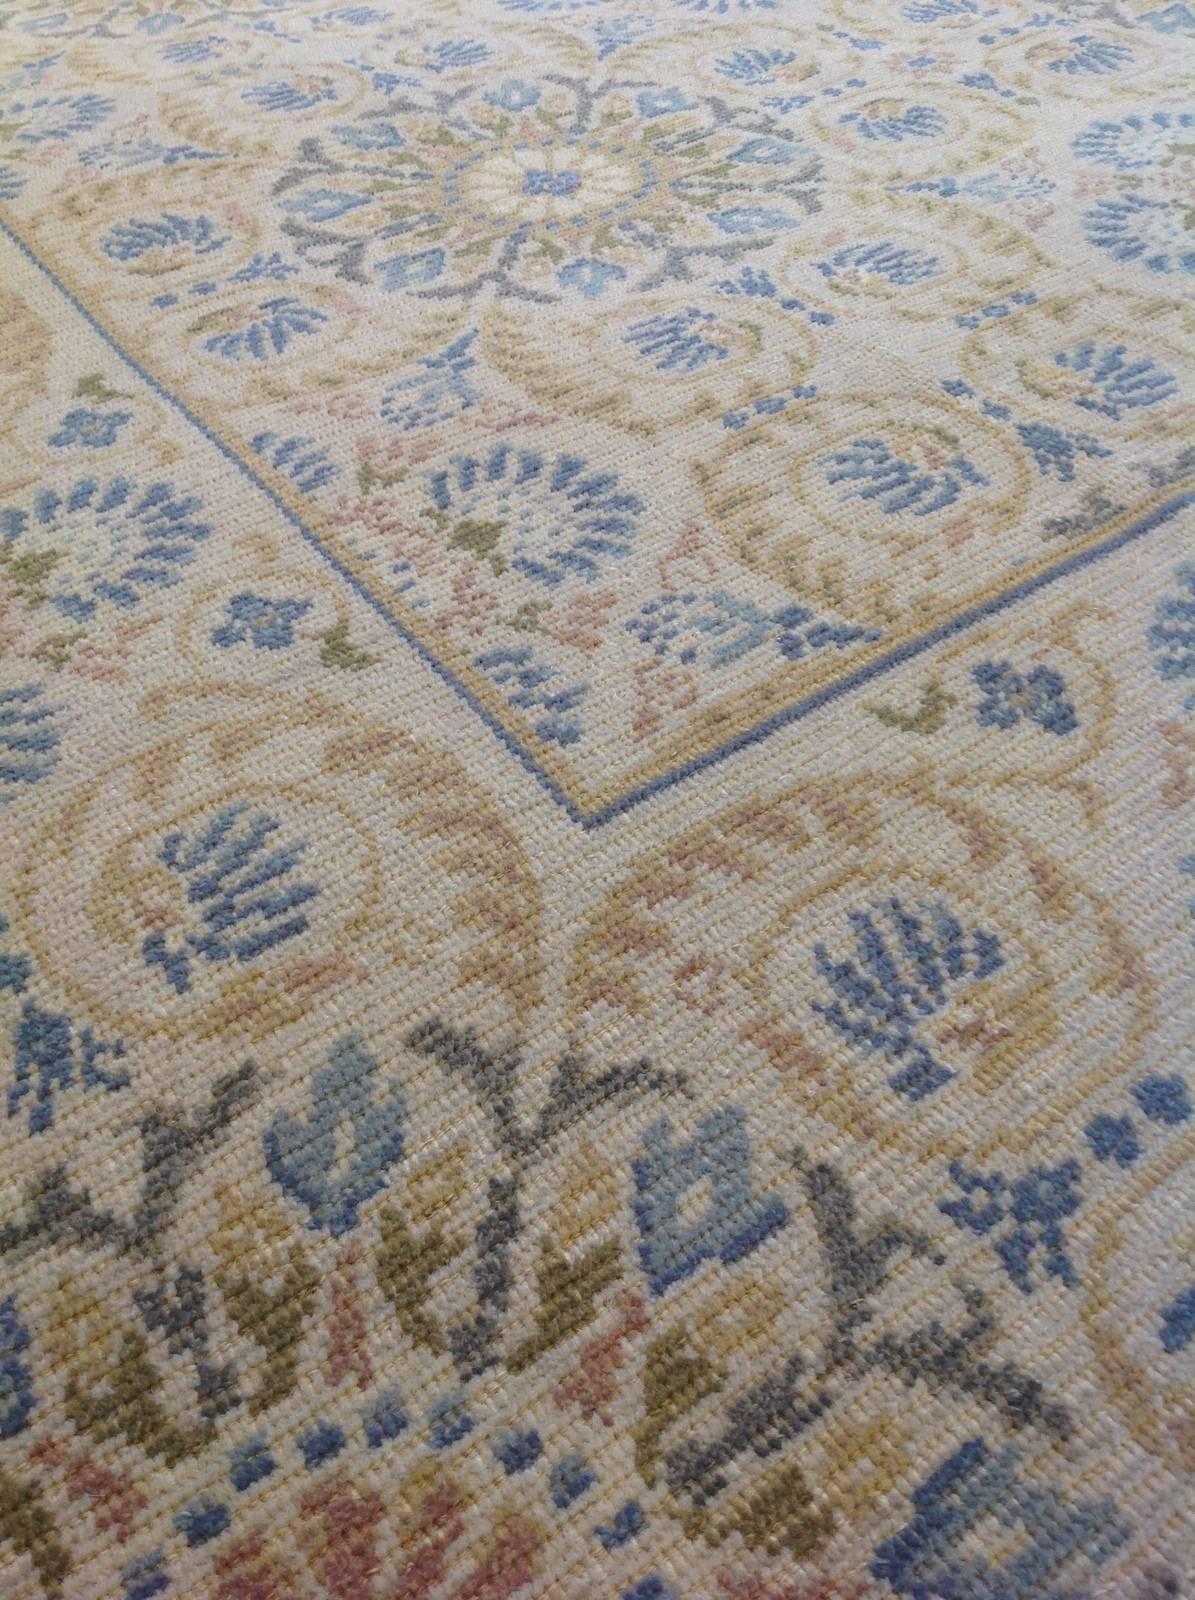 Geometric Floral European rug
Colors: Tan, cream, dark brown, grey, blue.